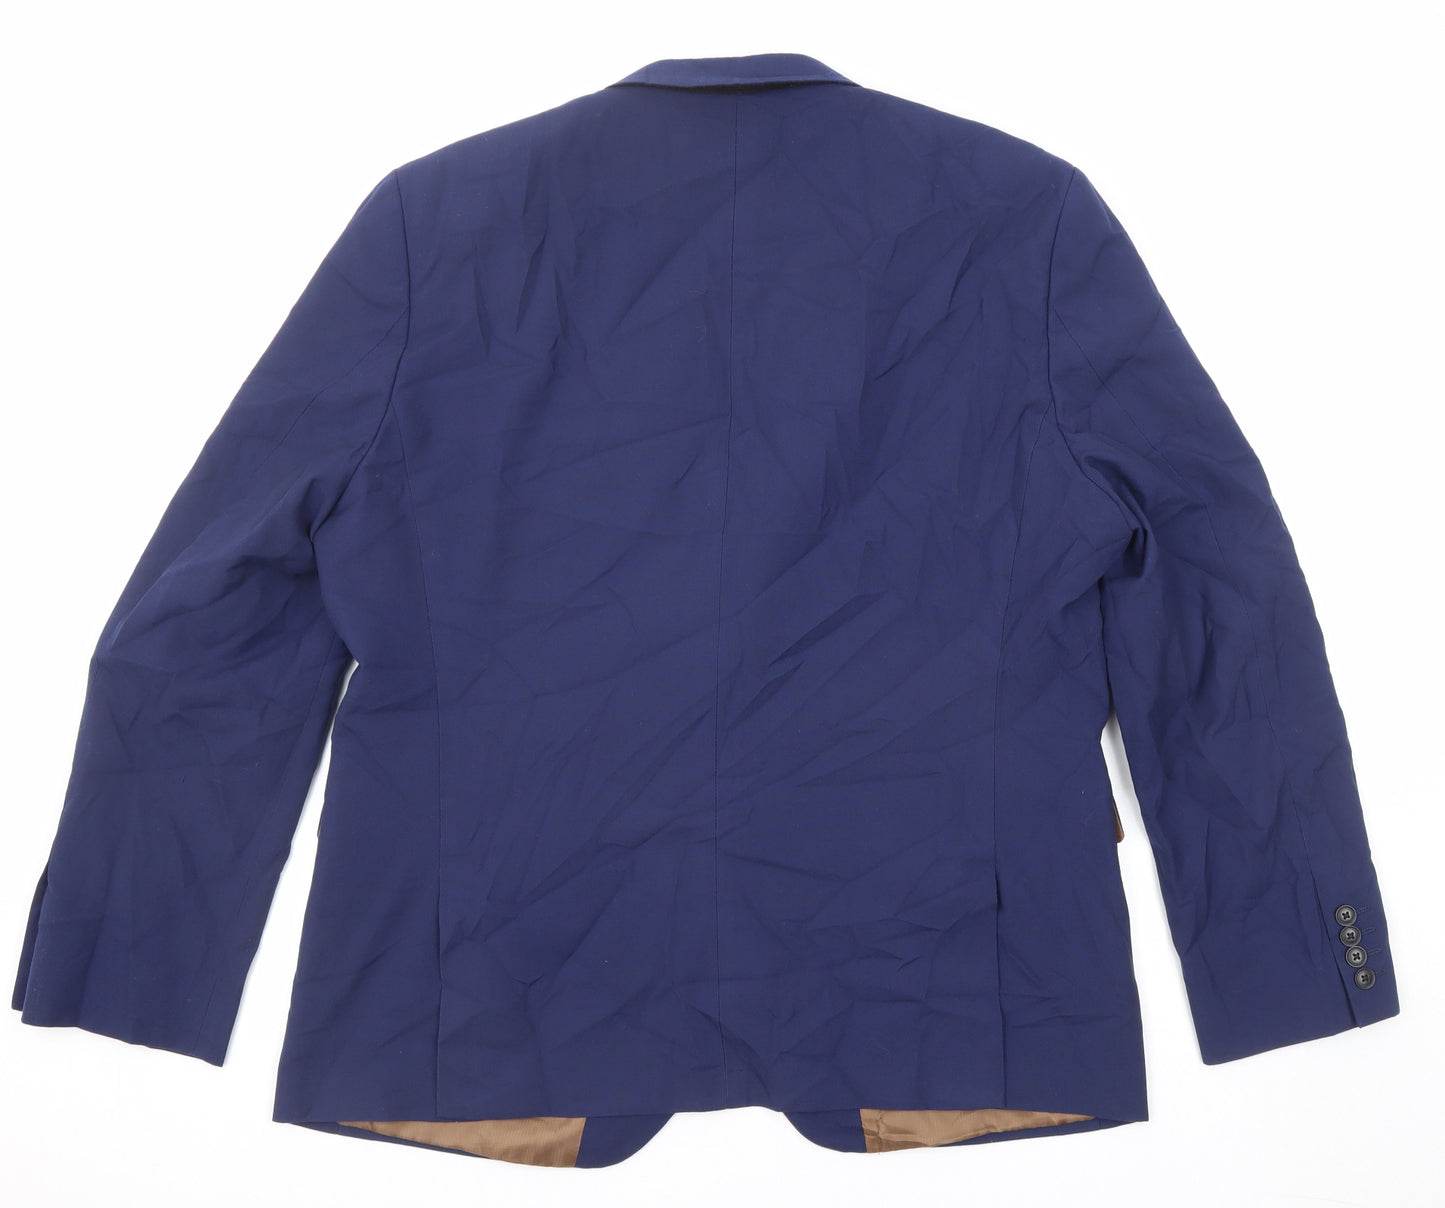 NEXT Mens Blue Polyester Jacket Suit Jacket Size 46 Regular